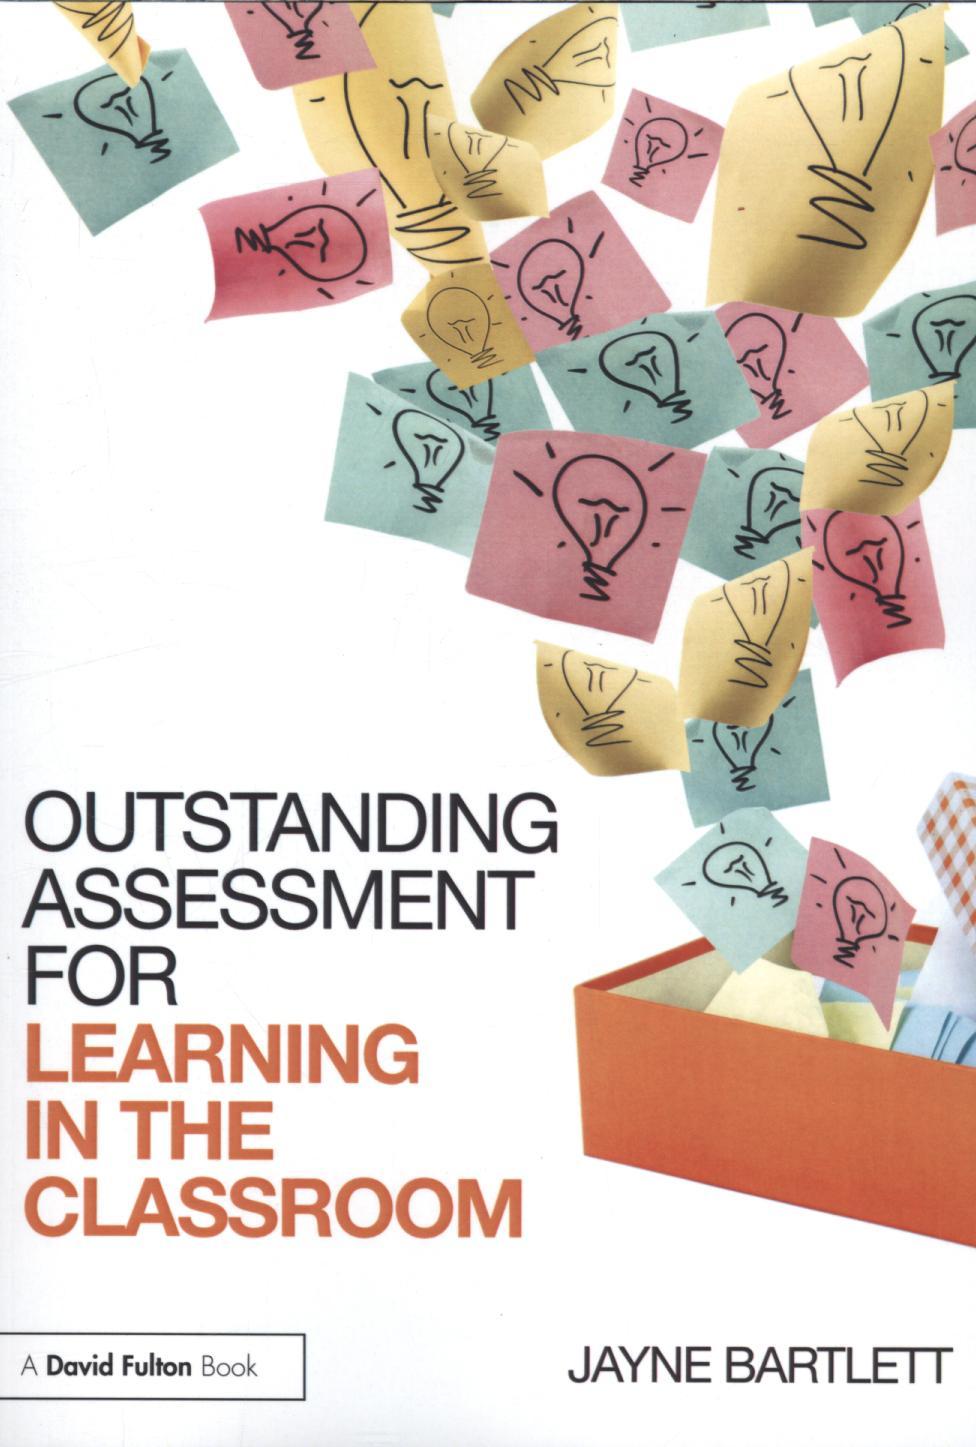 Outstanding Assessment for Learning in the Classroom - Jayne Bartlett